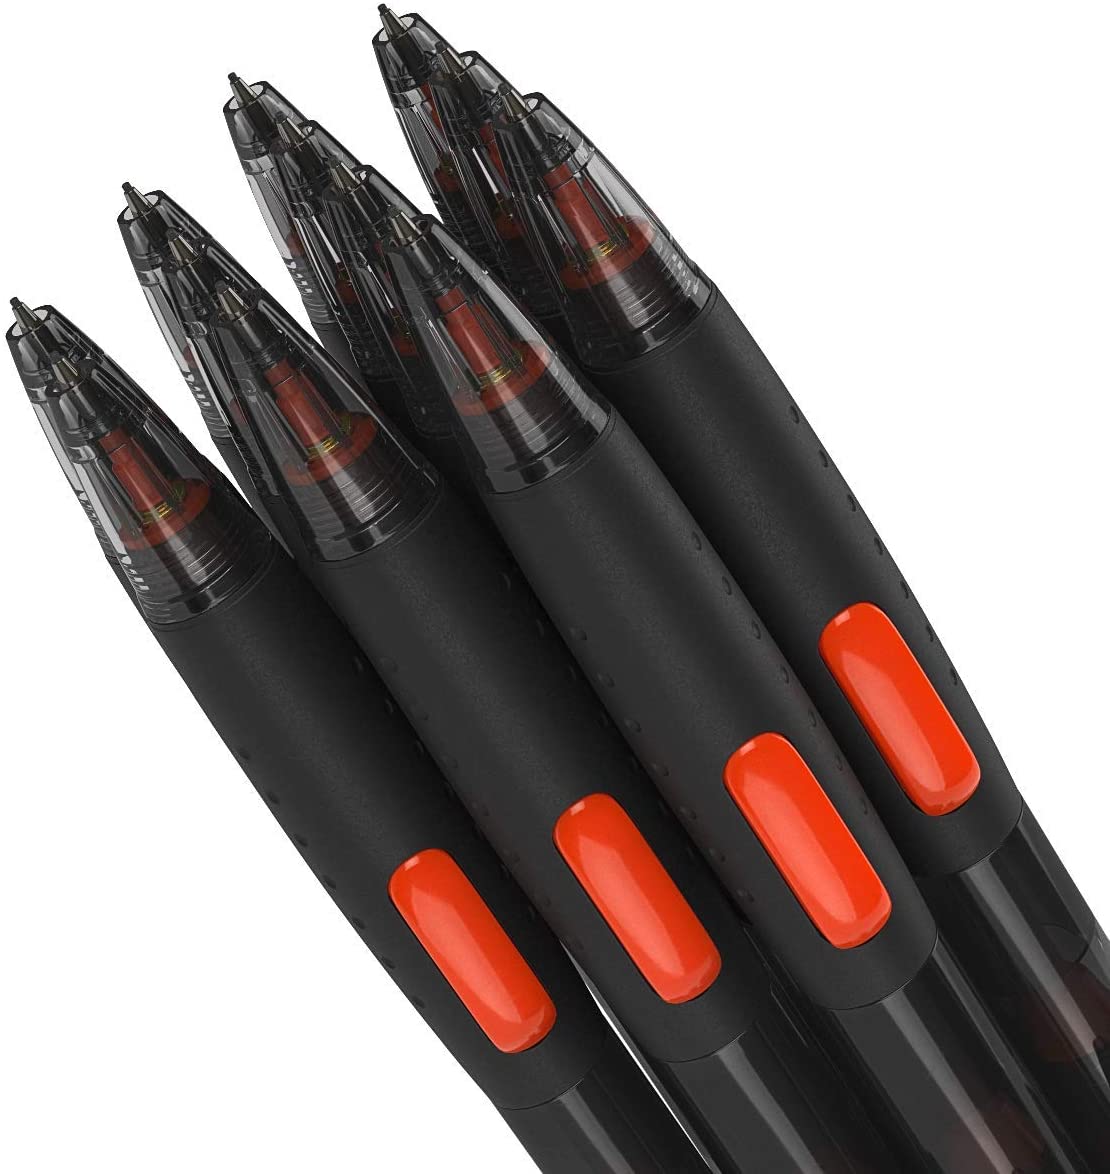 #2 HB Mechanical Pencils - 20 Pack